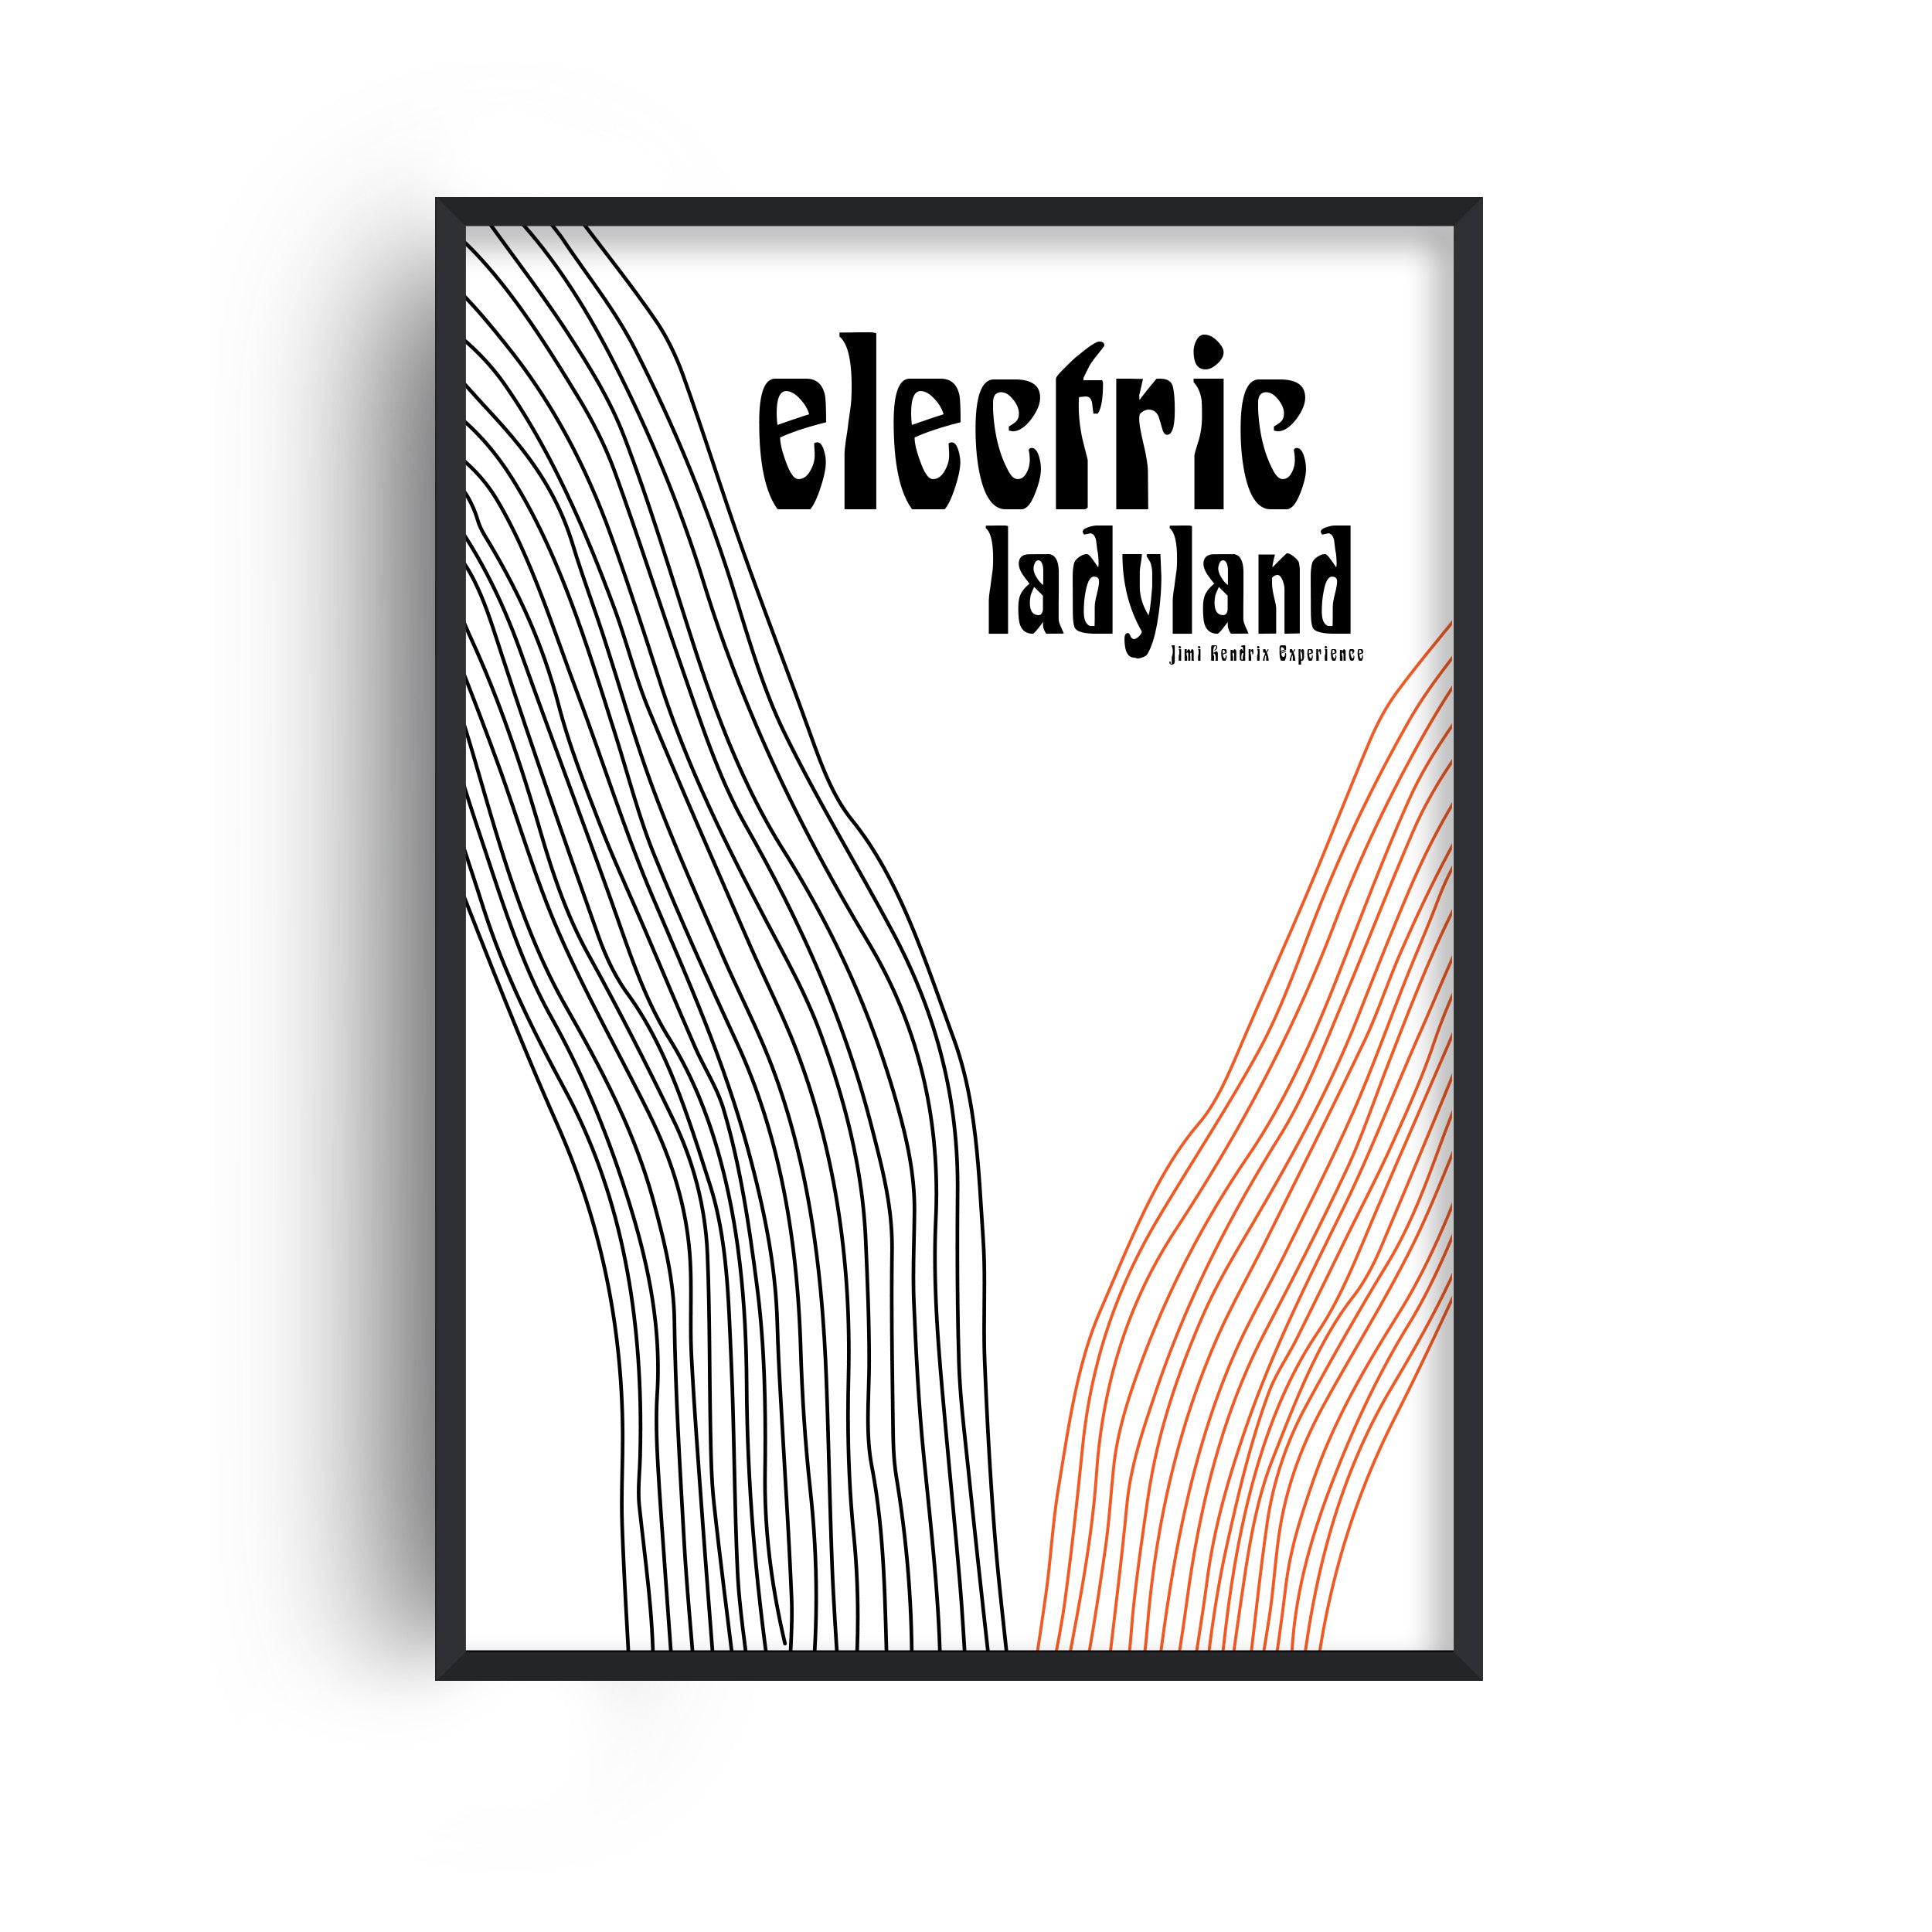 Electric ladyland Giclée retro Art Print